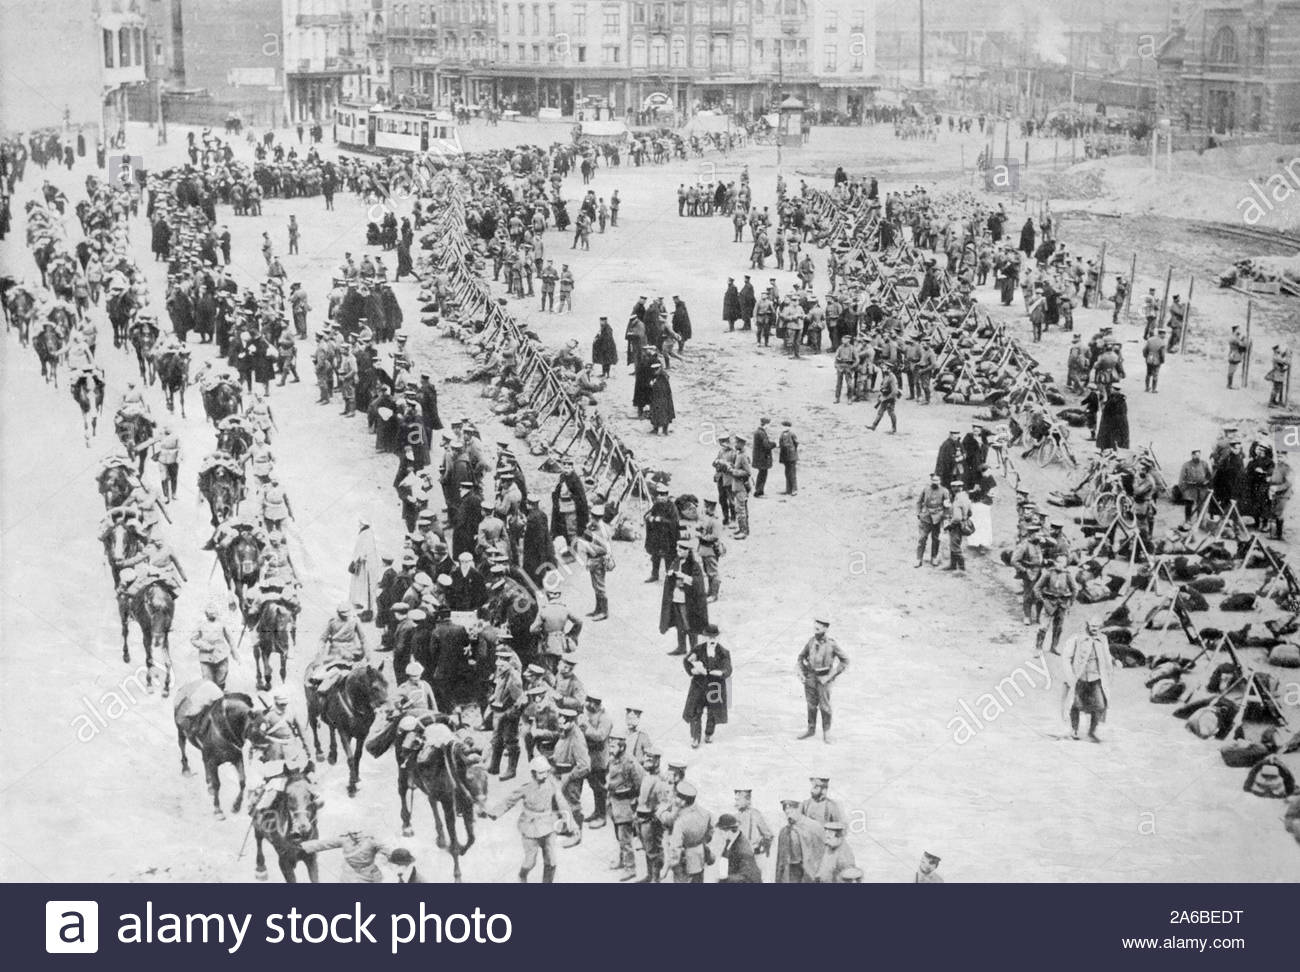 WW1 German Troops in Antwerp Belgium, vintage photograph from 1914 Stock Photo